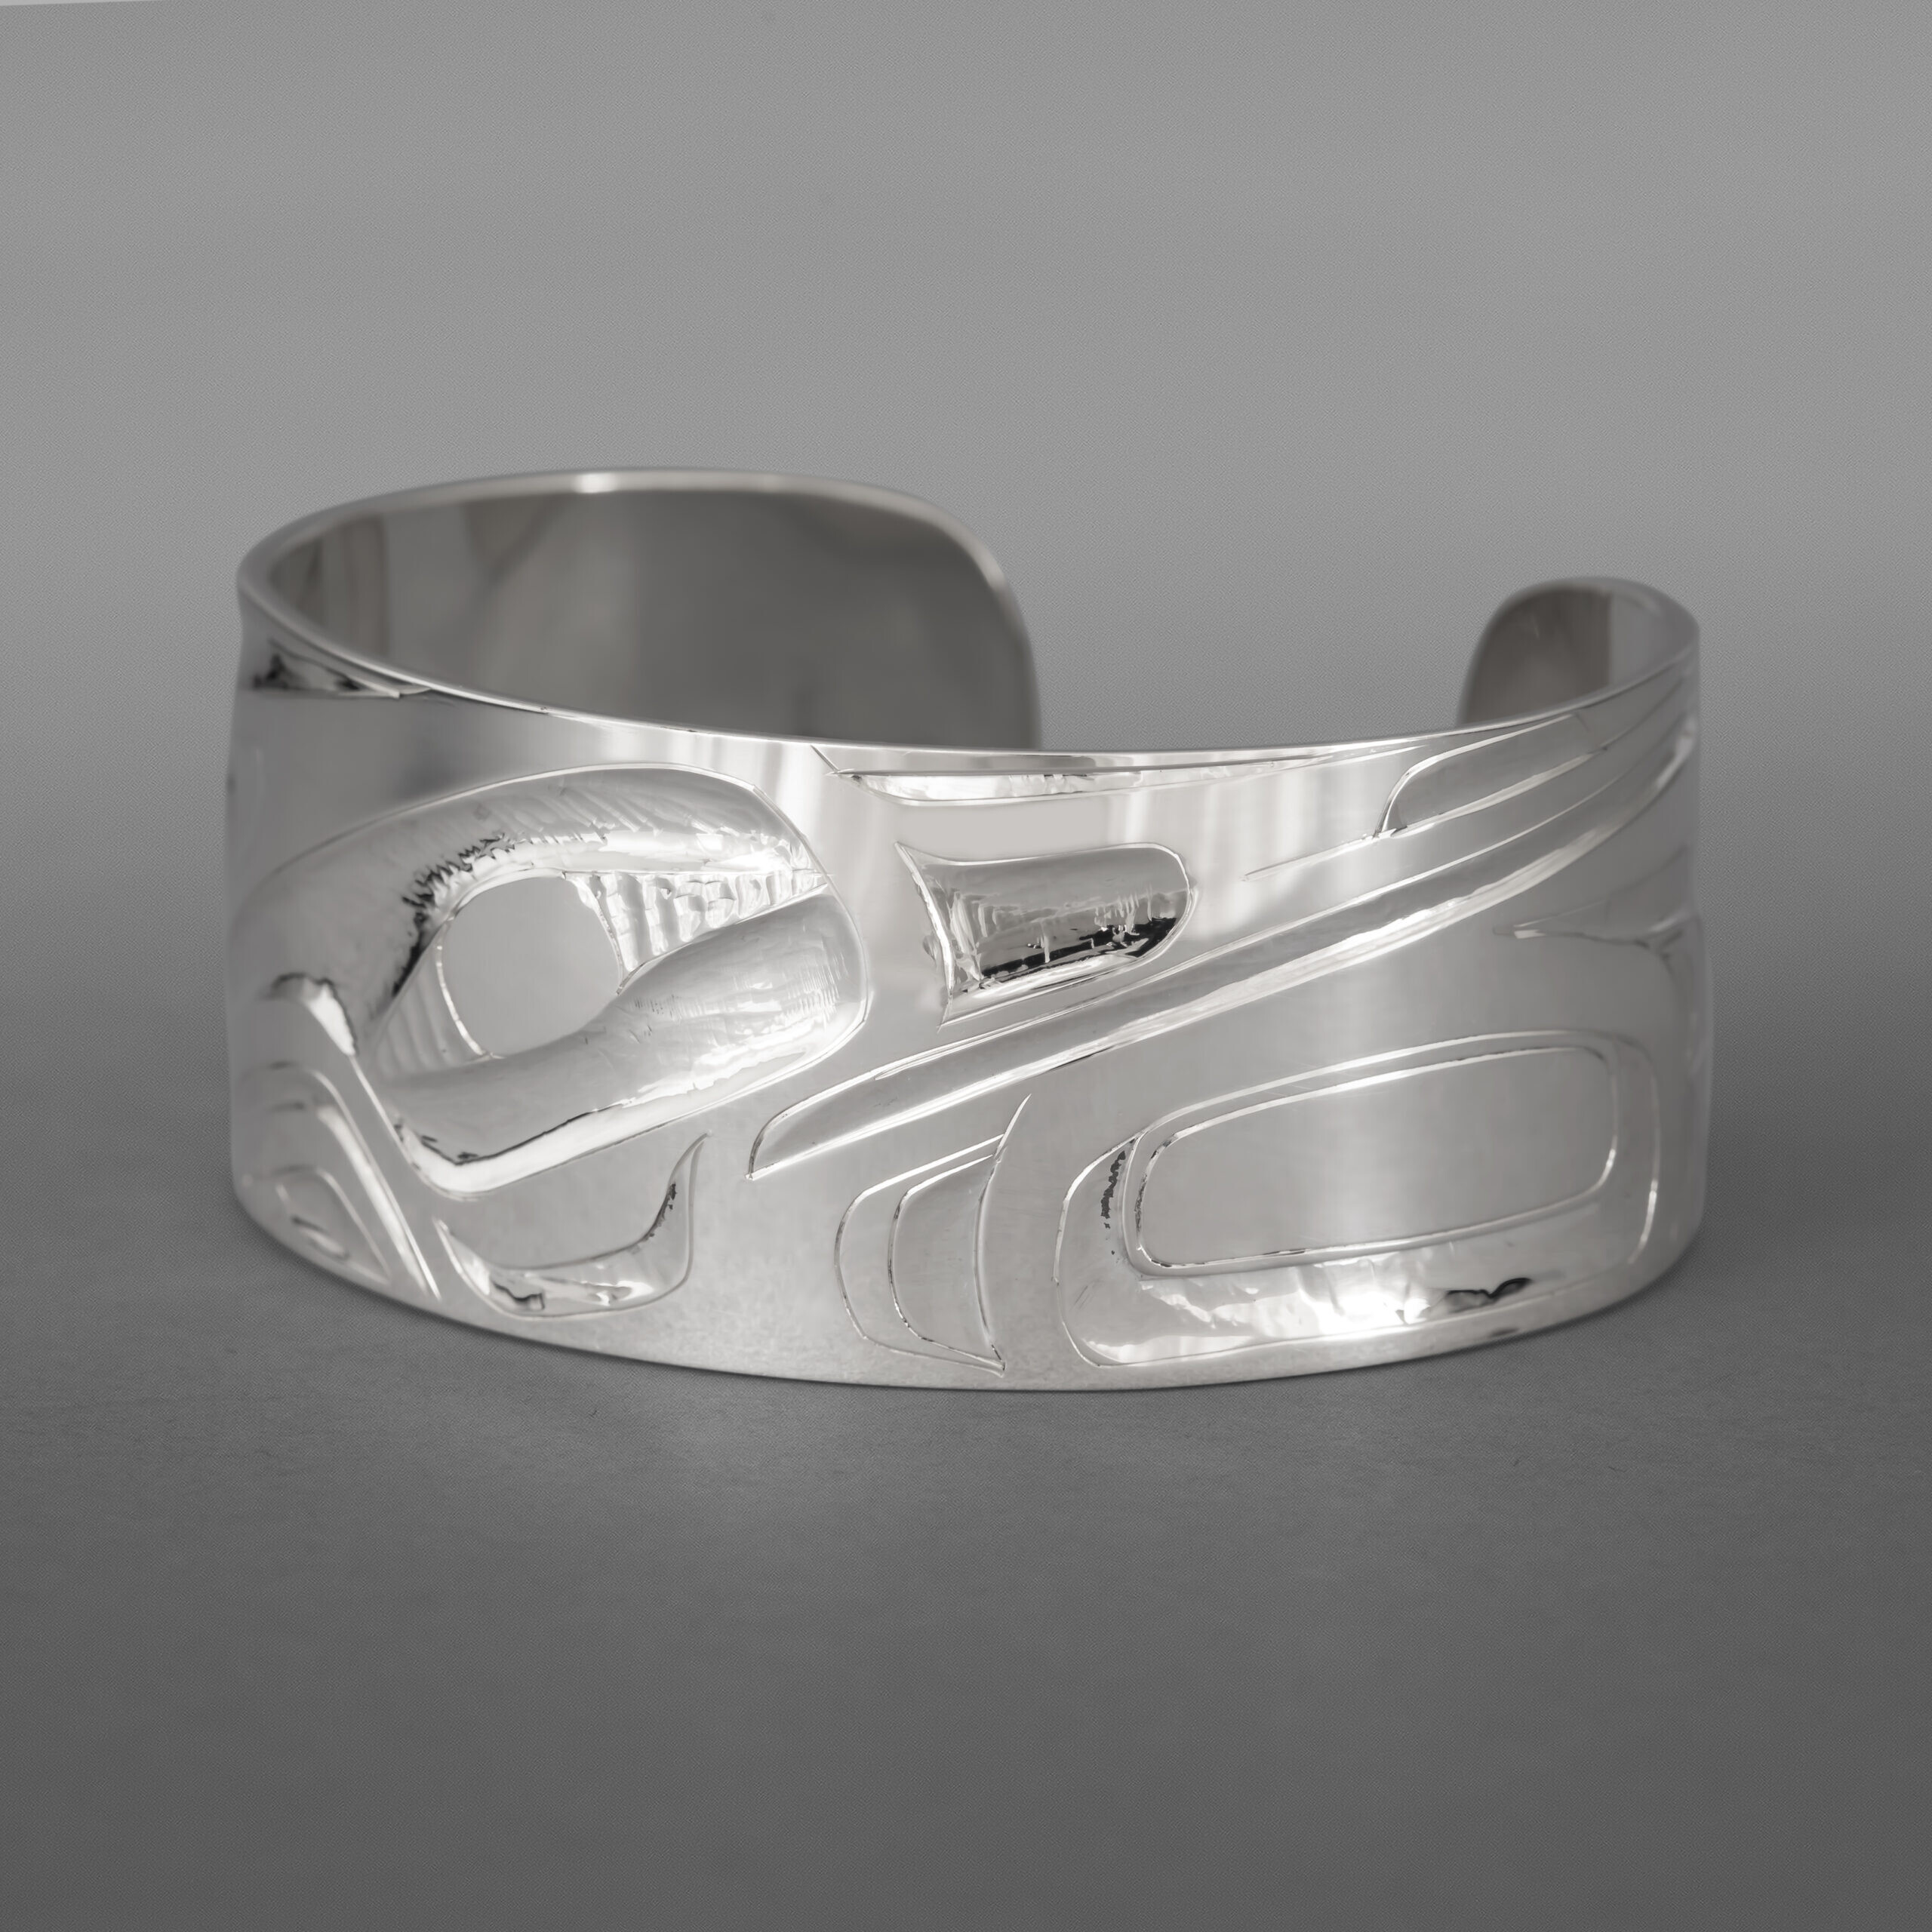 Patient Heron Bracelet
Alvin Adkins
Haida
Sterling silver
1" x 6¼”
$650